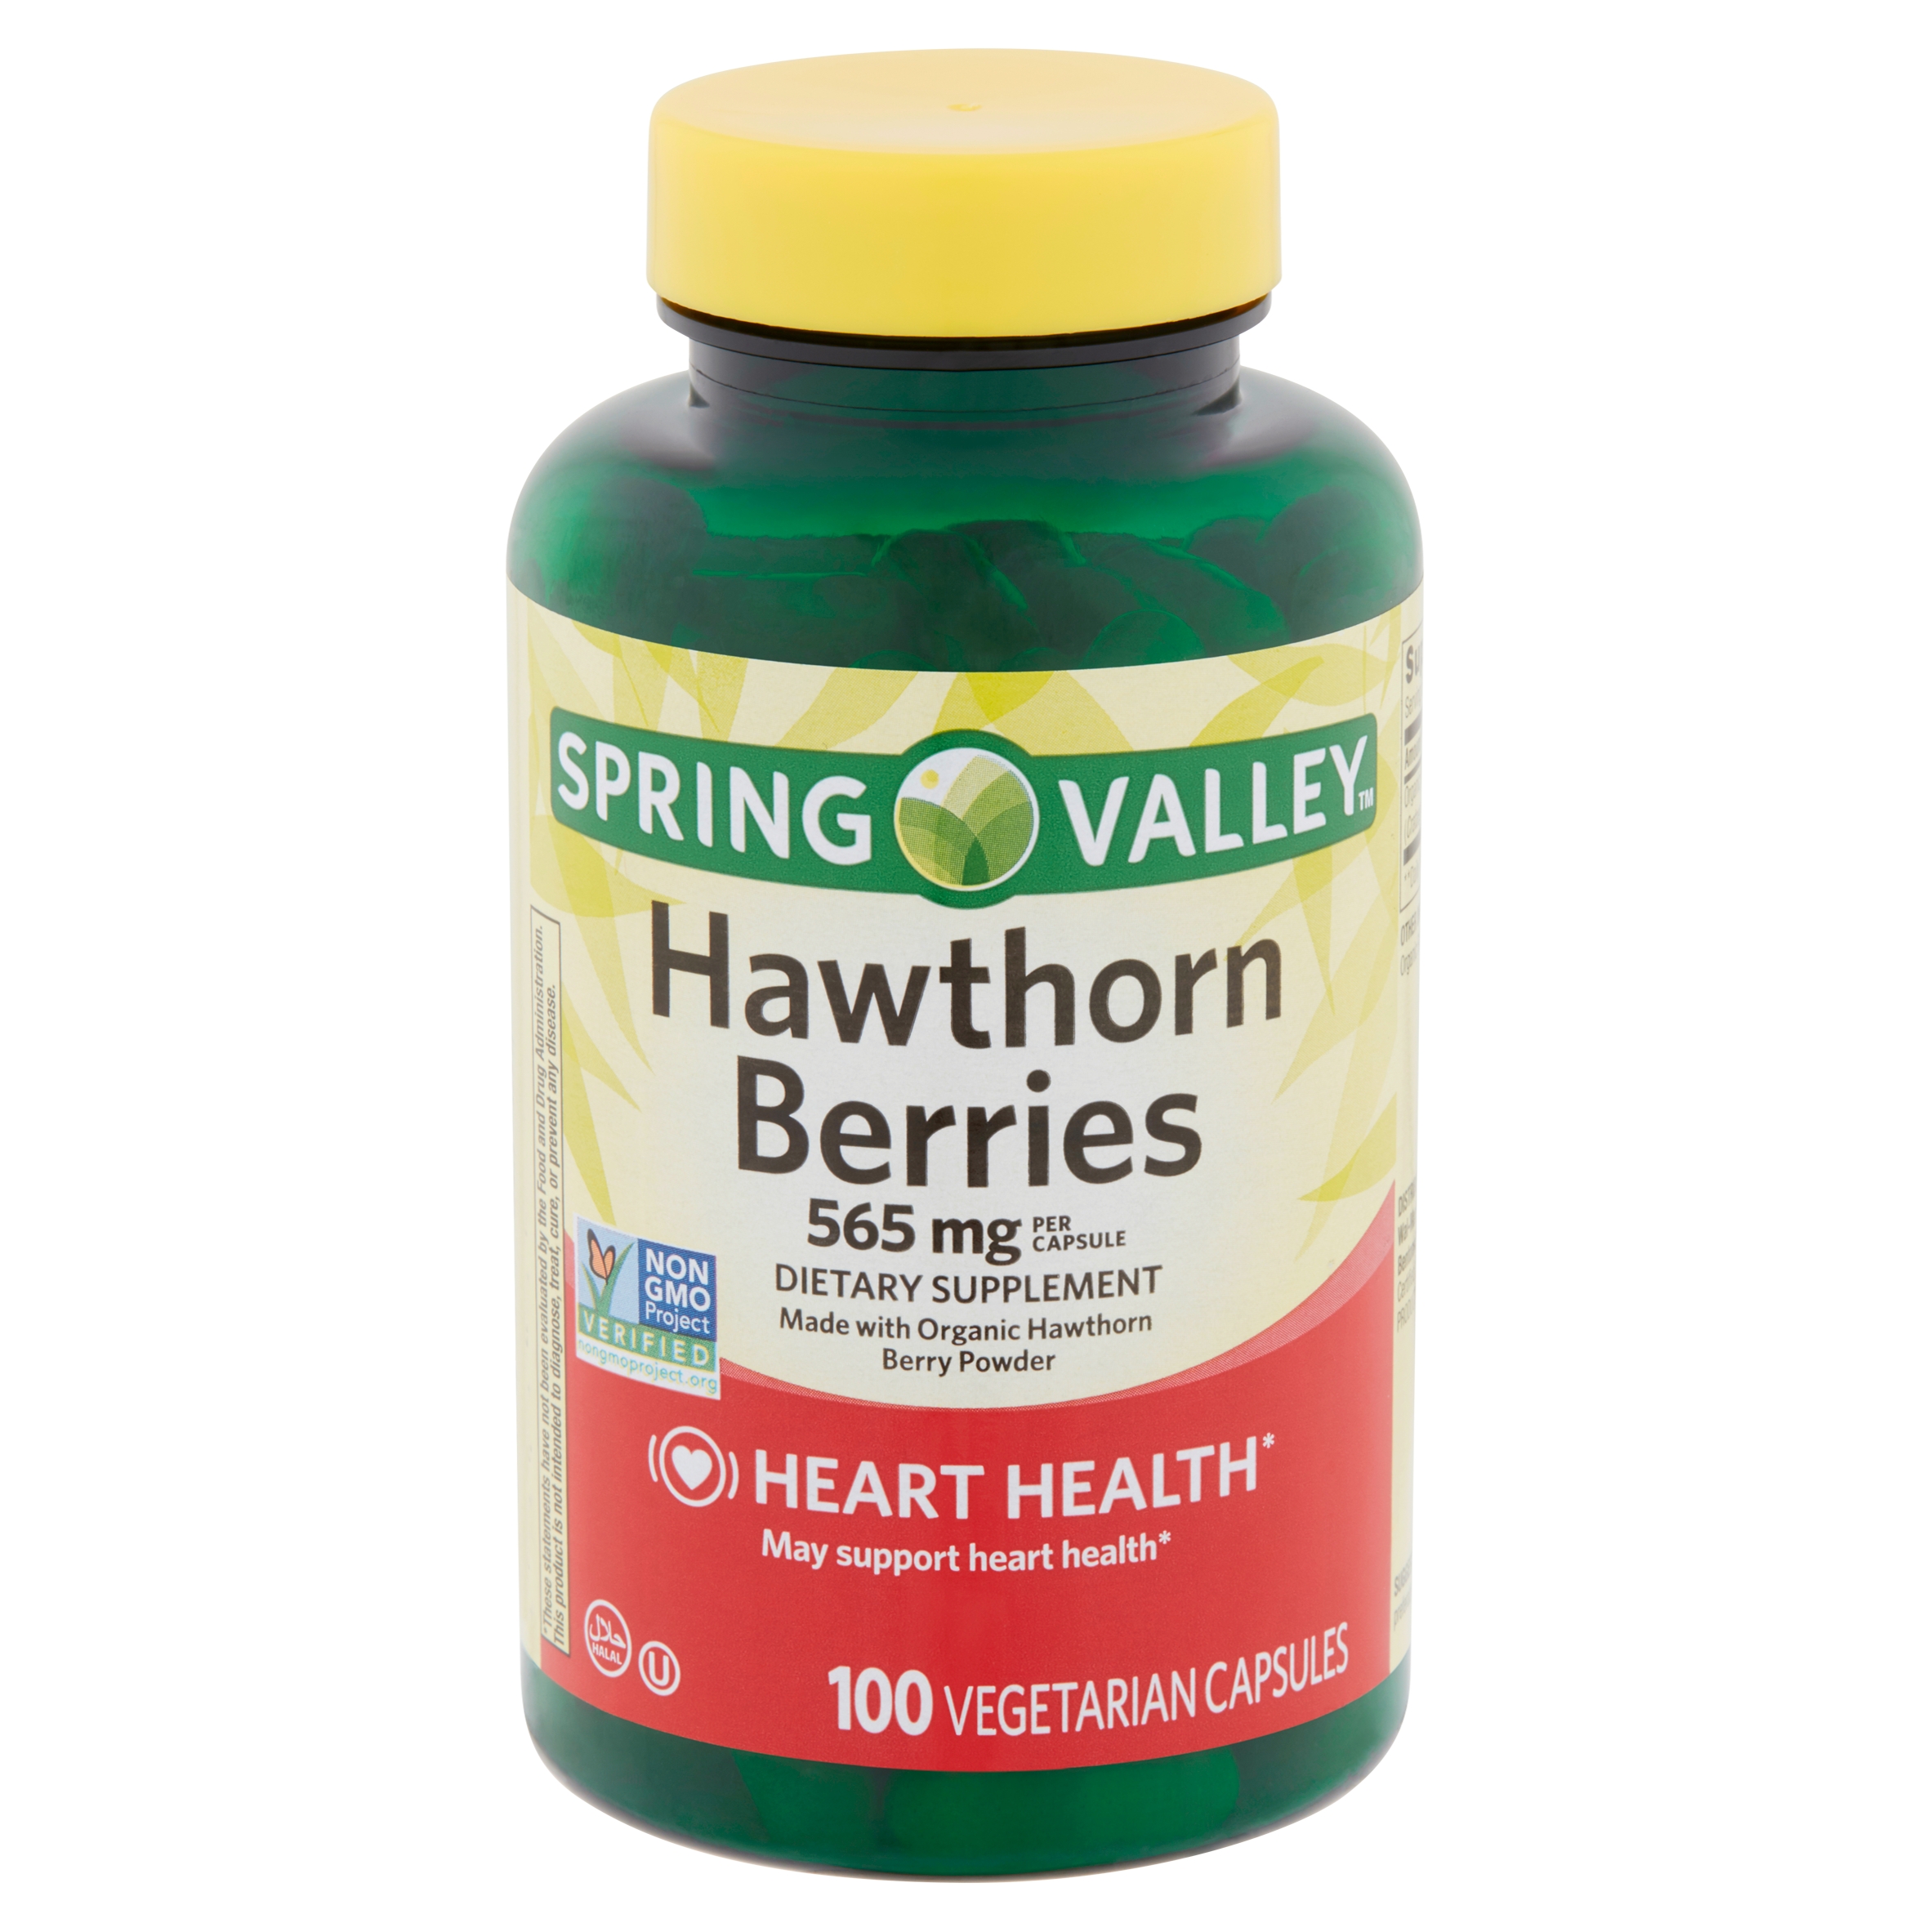 Spring Valley Hawthorn Berries Vegetarian Capsules, 565 mg, 100 Count - image 1 of 7